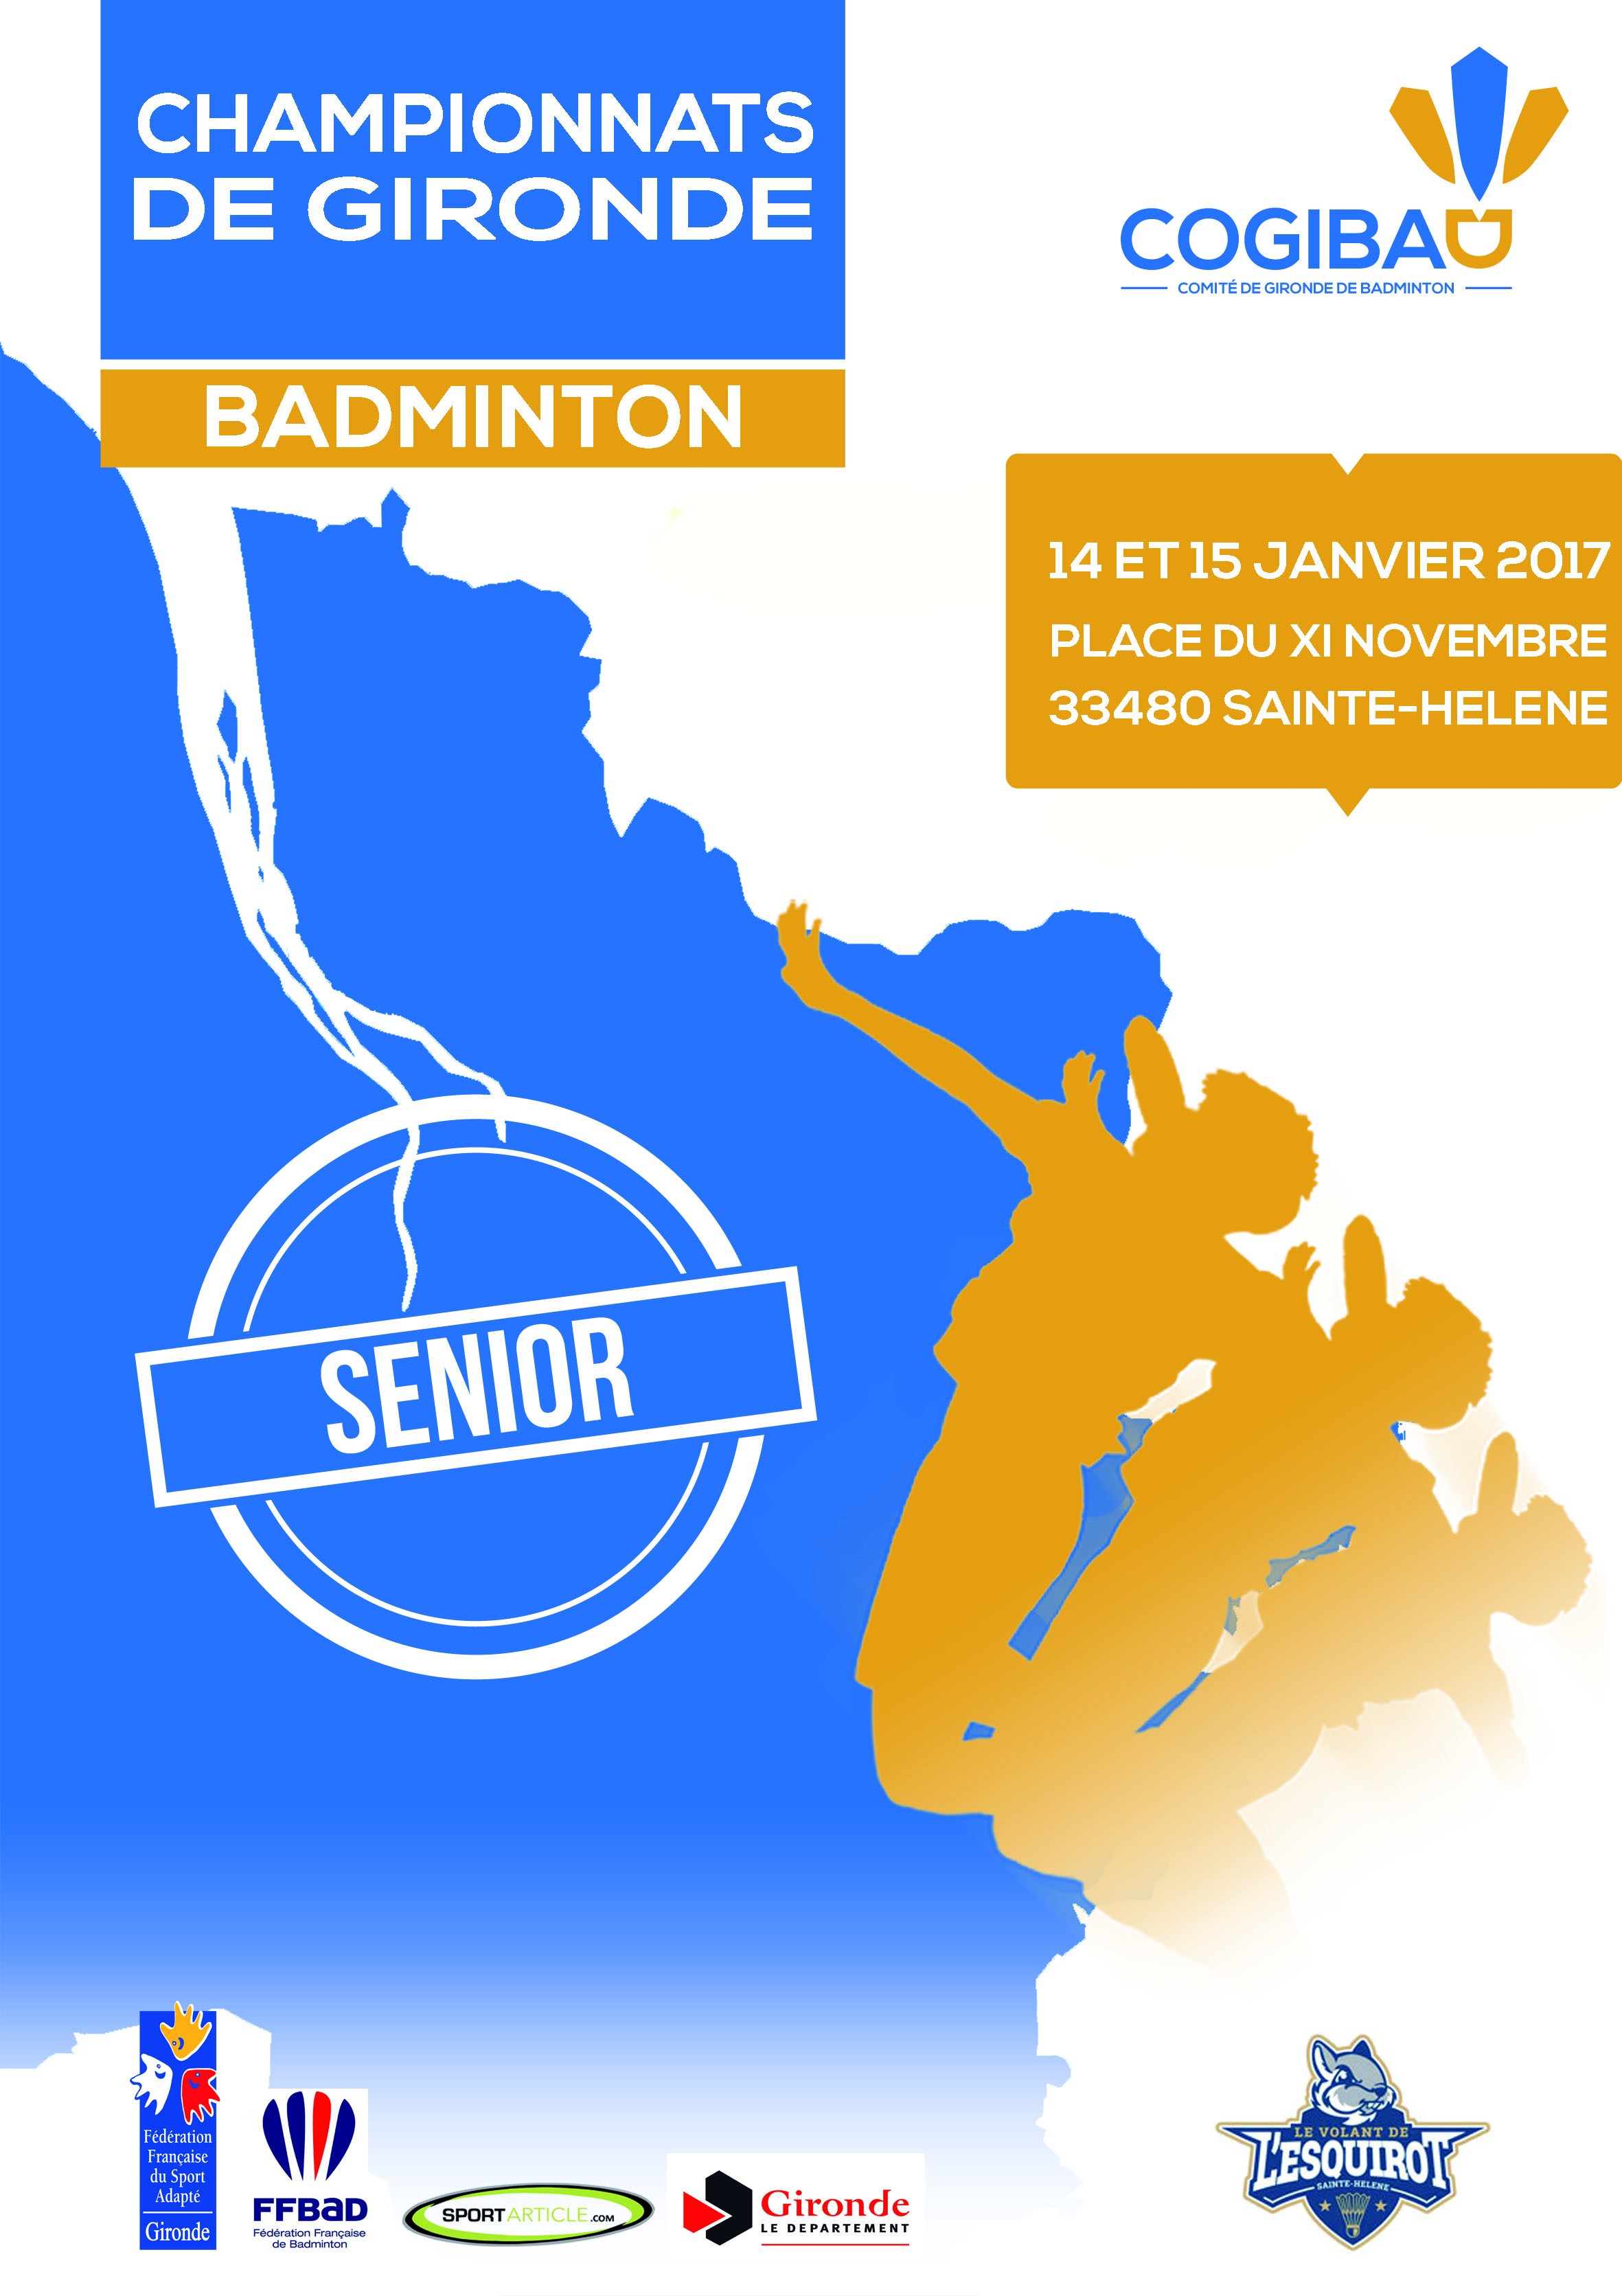 Gironde Seniors 2016 2017 2